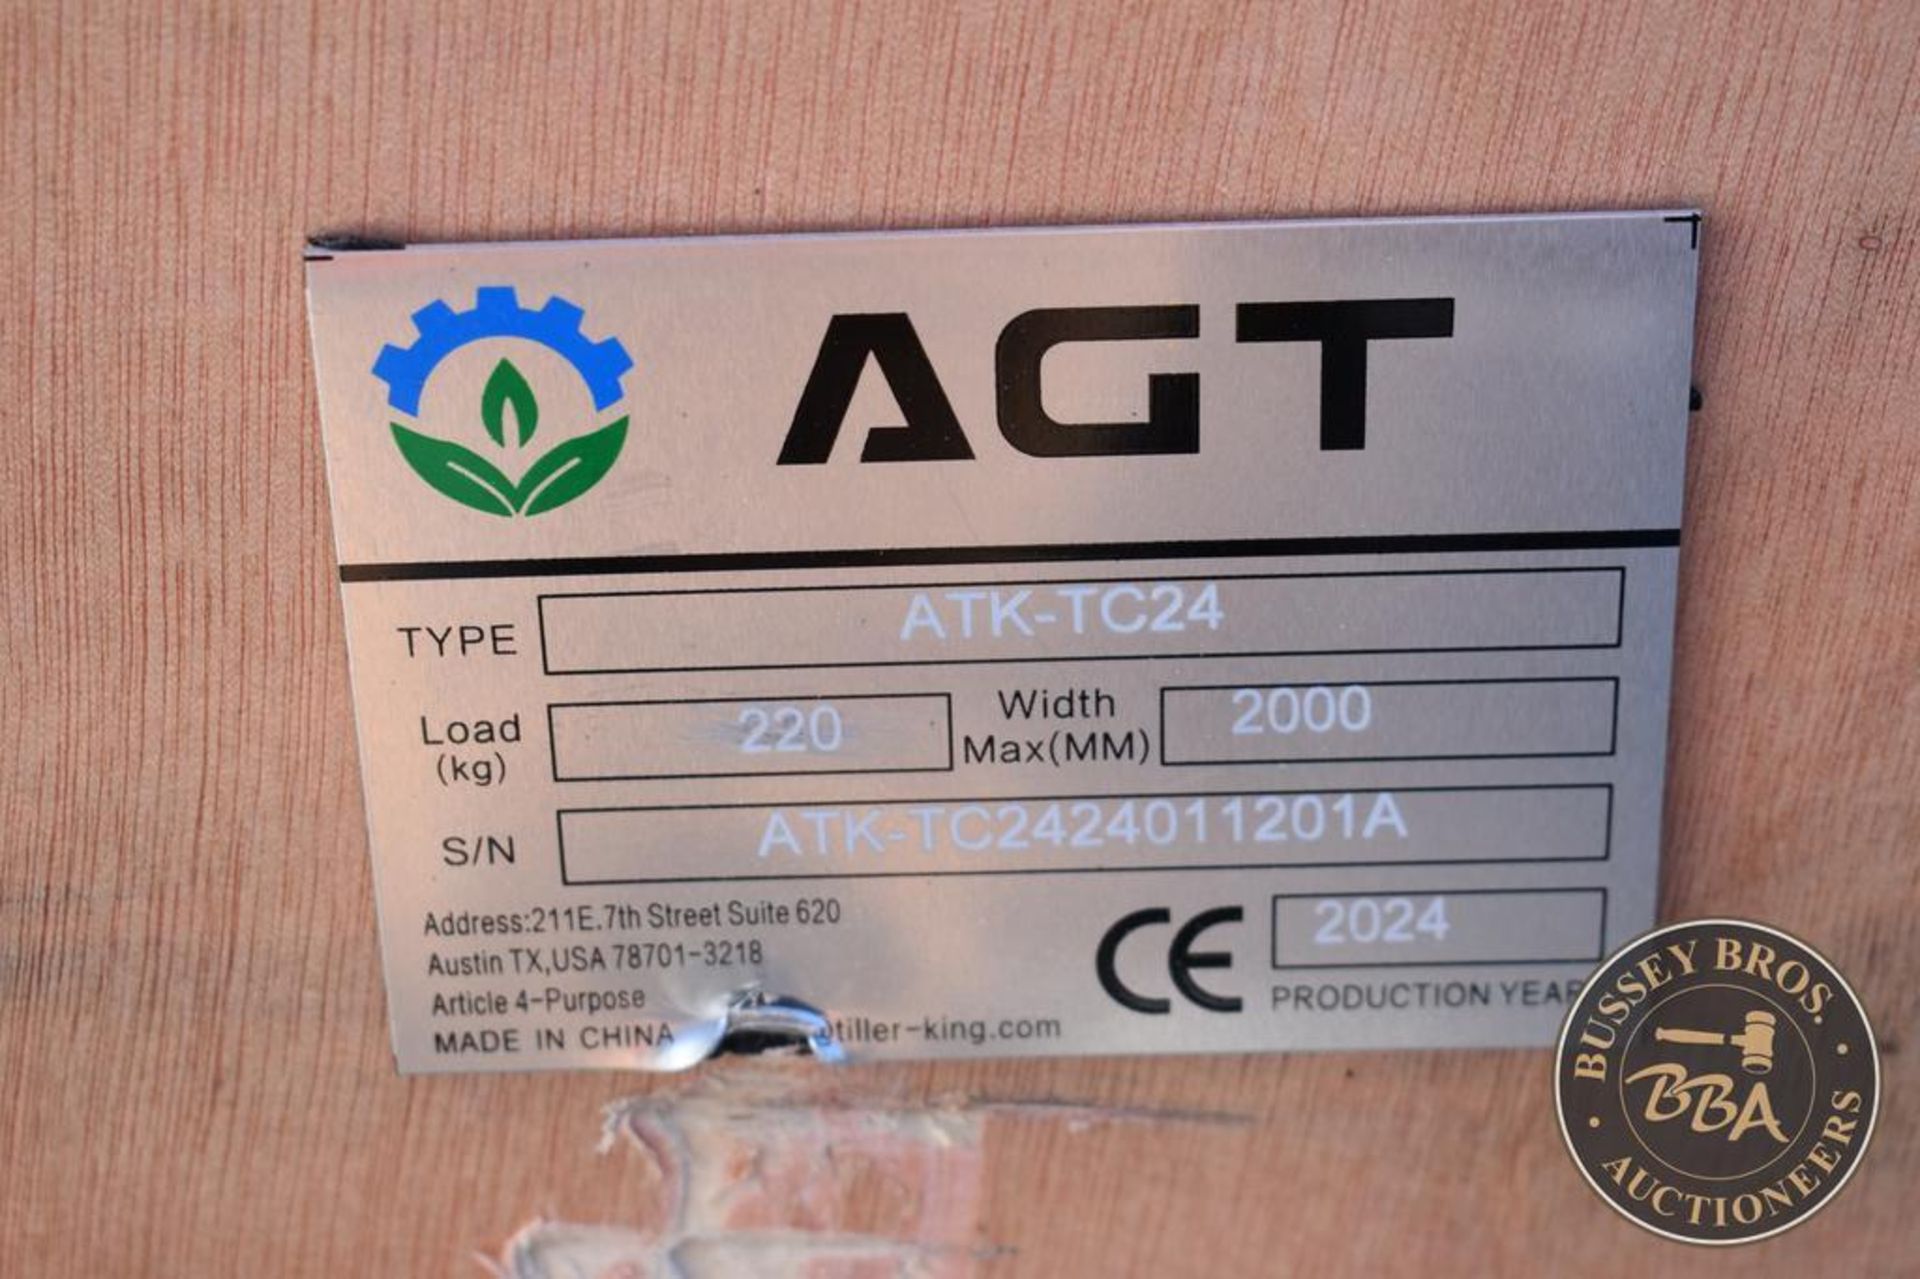 AGT INDUSTRIAL ATK-TC24 27484 - Image 7 of 9